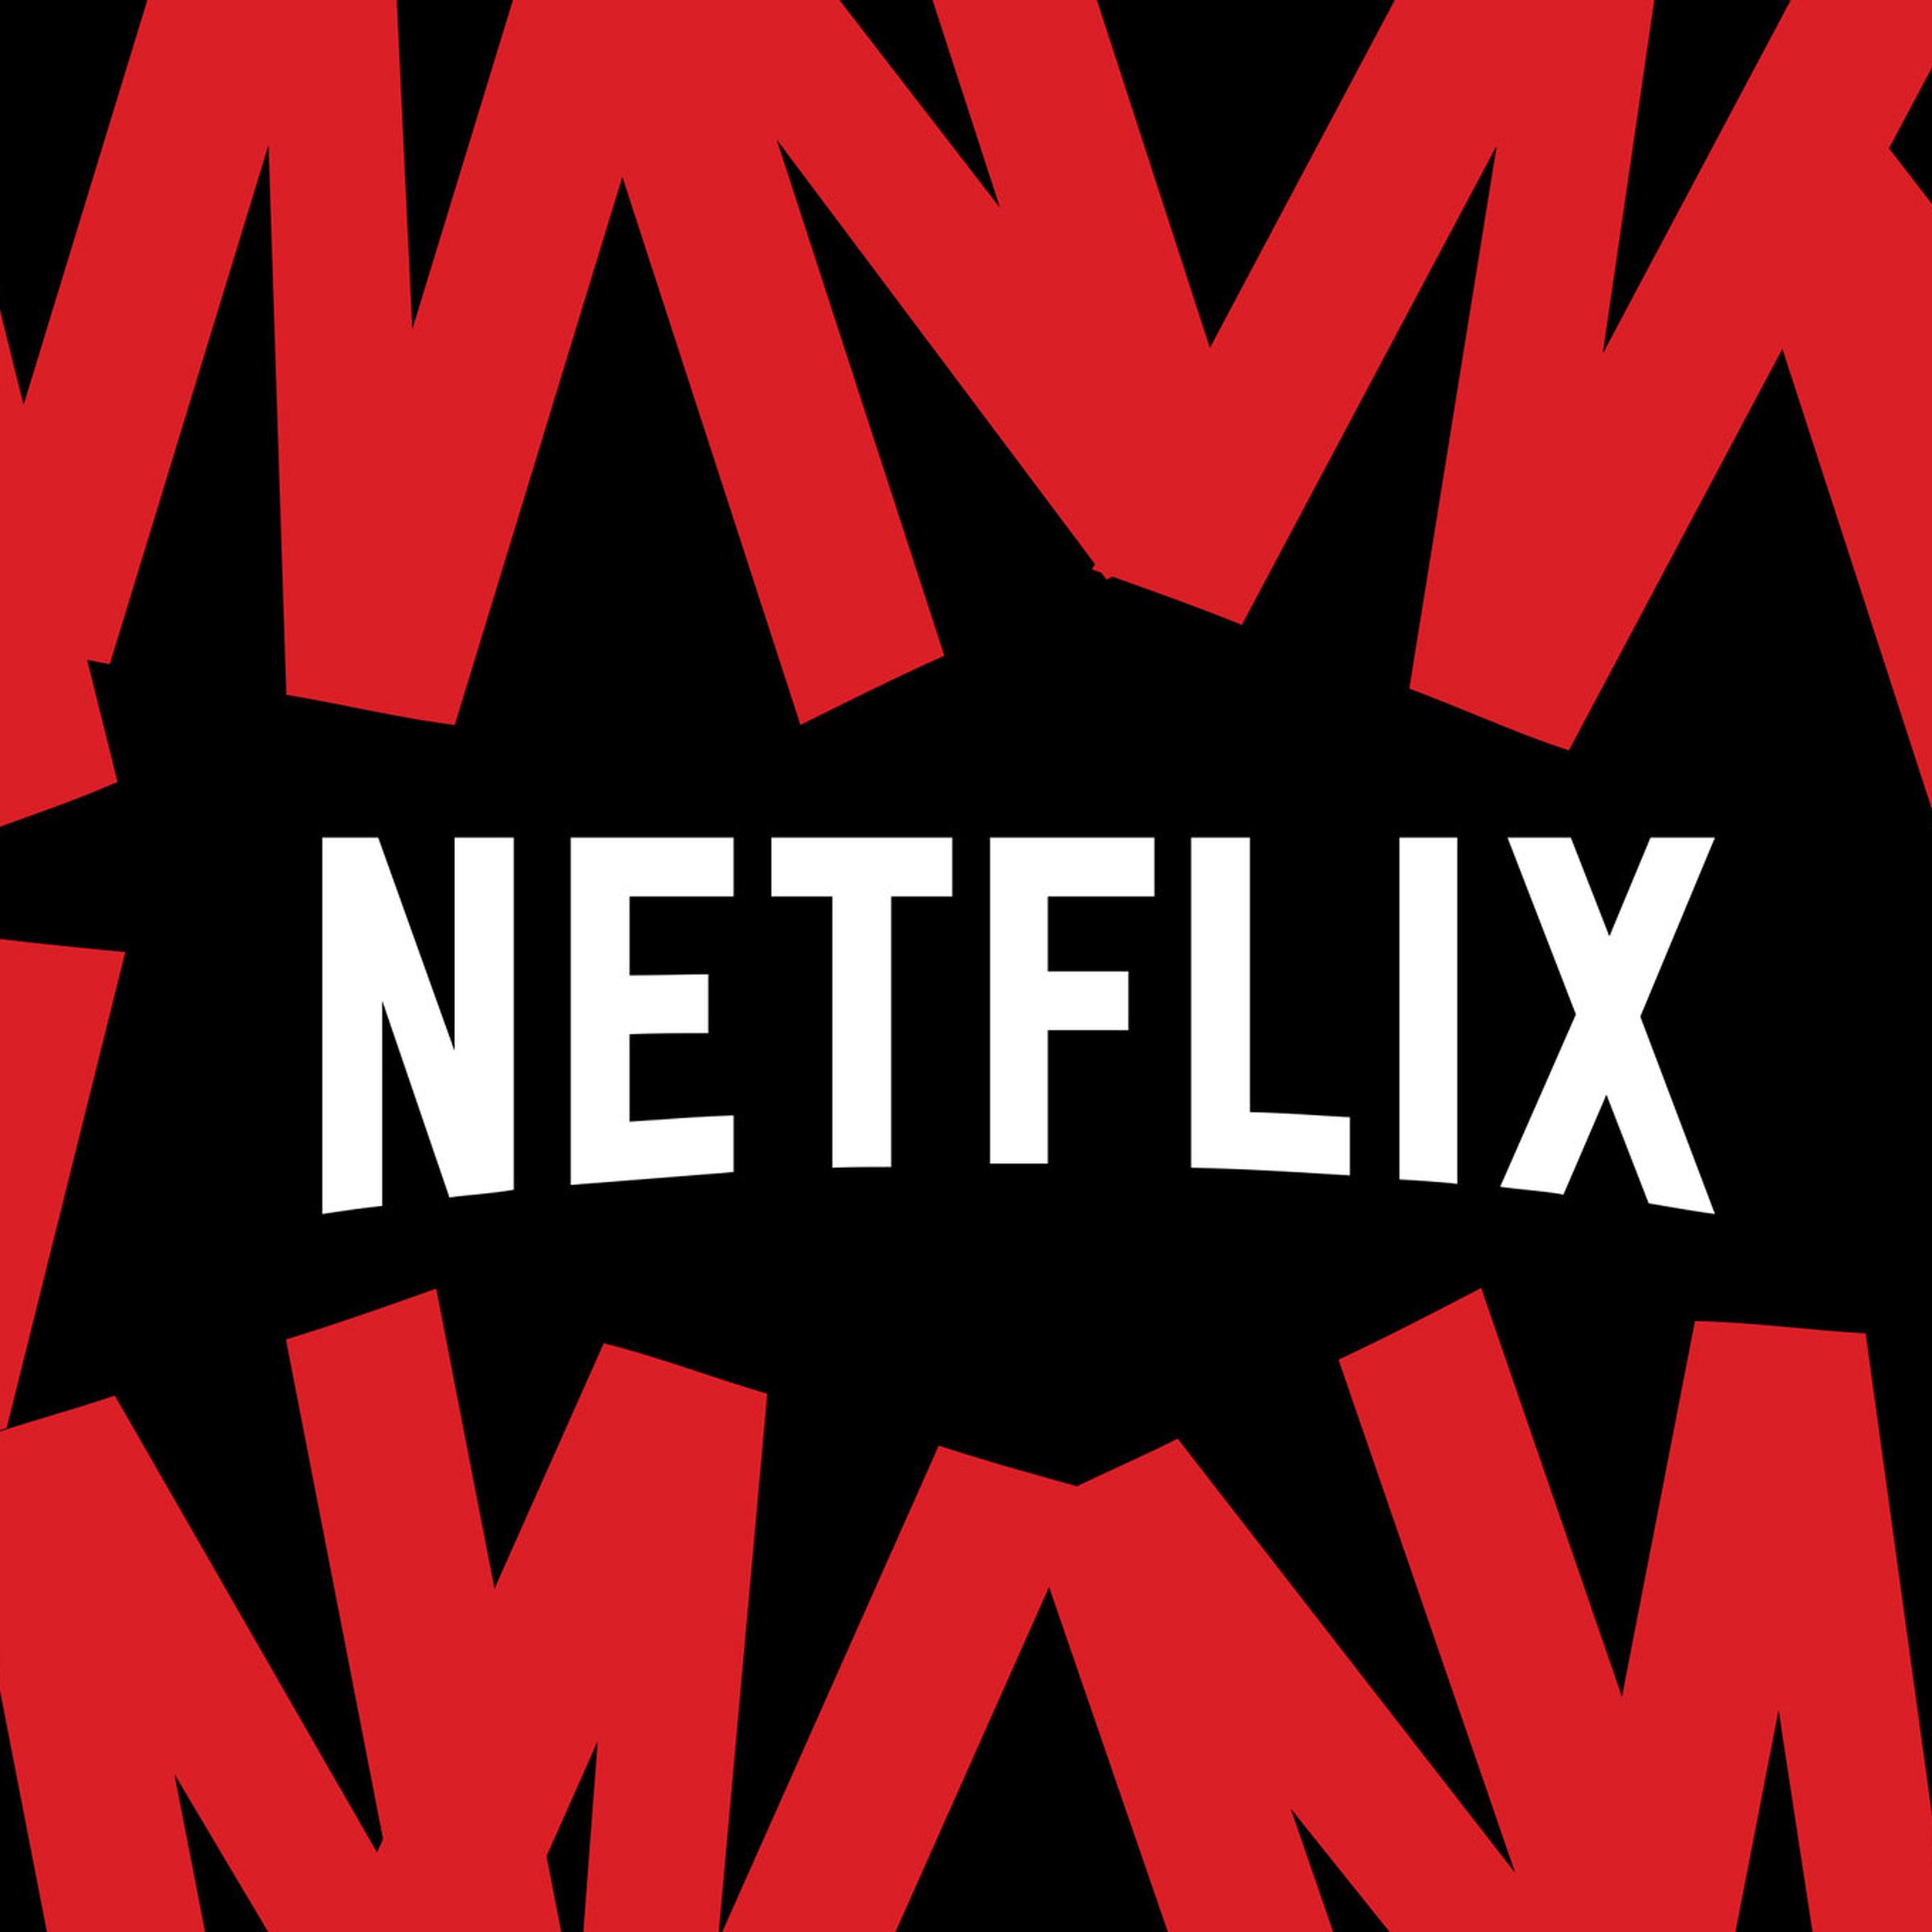 An illustration of the Netflix logo.